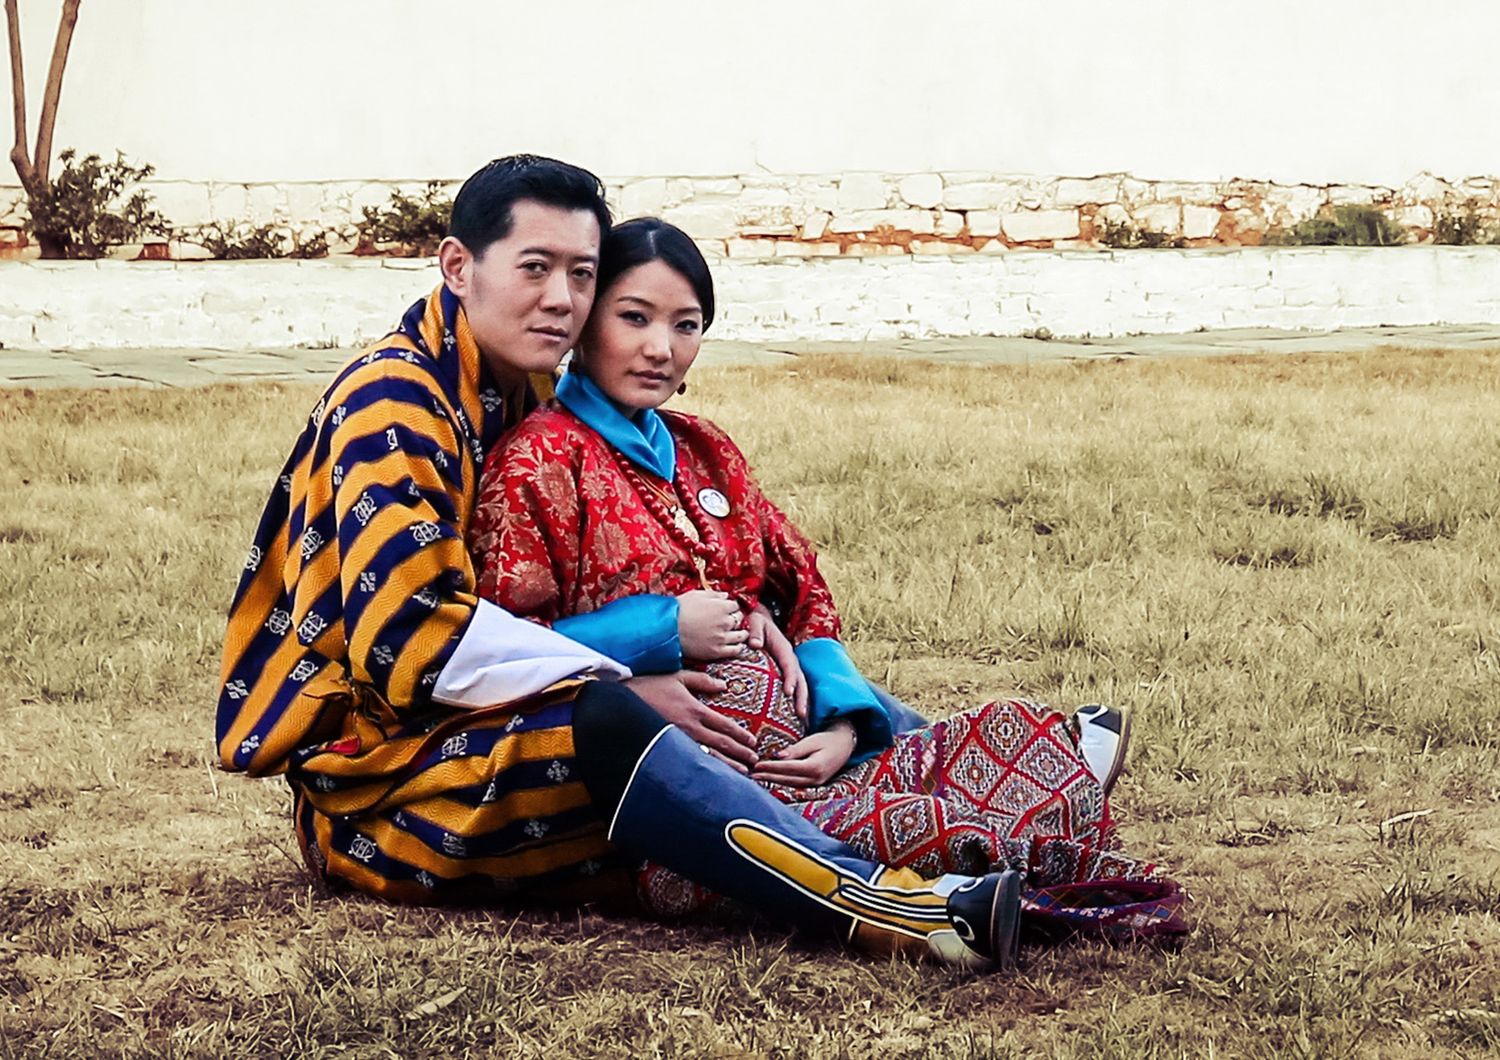 Bhutan la coppia reale (Afp)&nbsp;